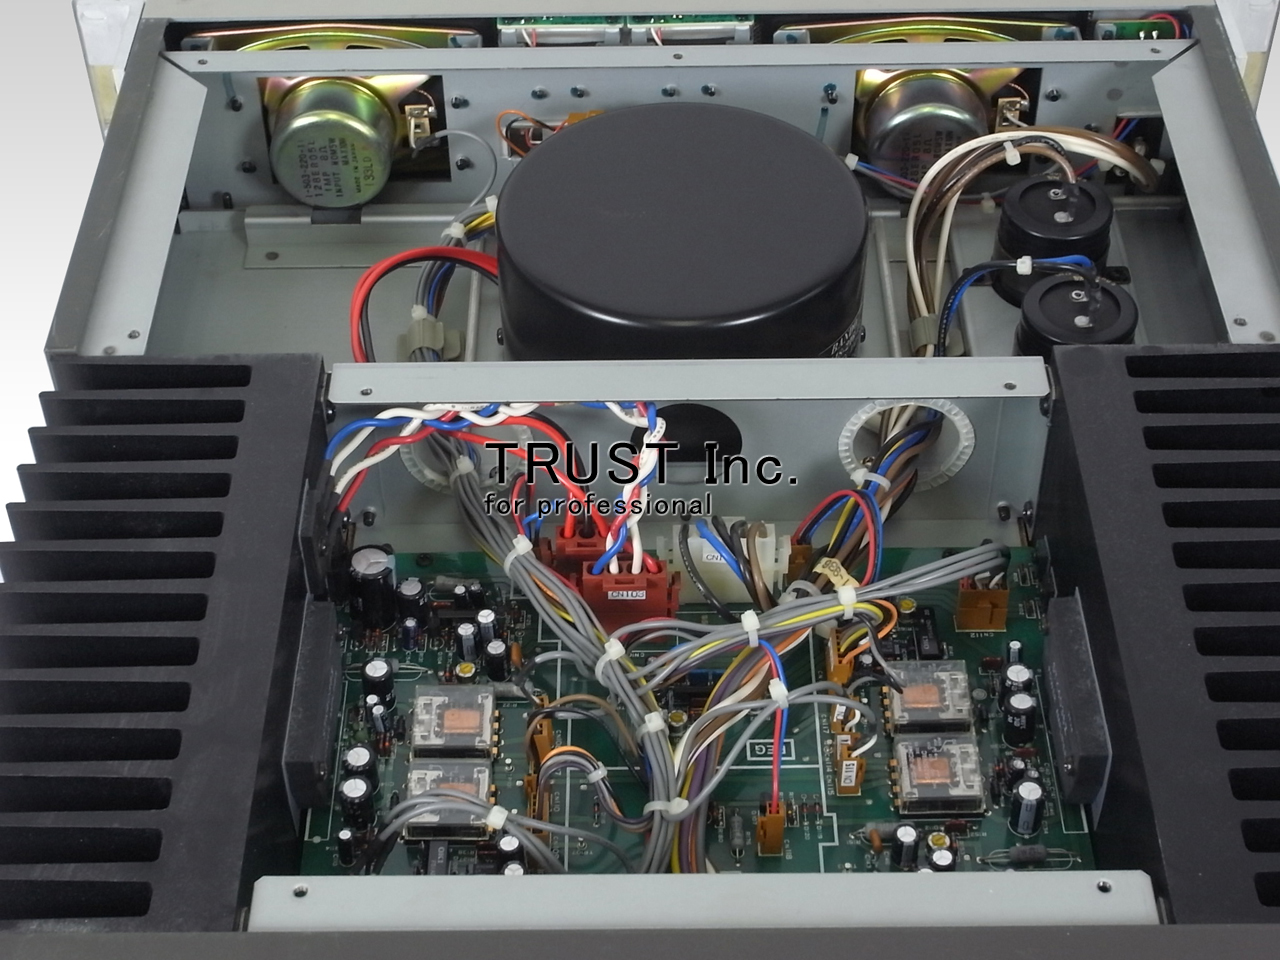 AMS-3 / Audio Monitor Speaker【中古放送用・業務用 映像機器・音響